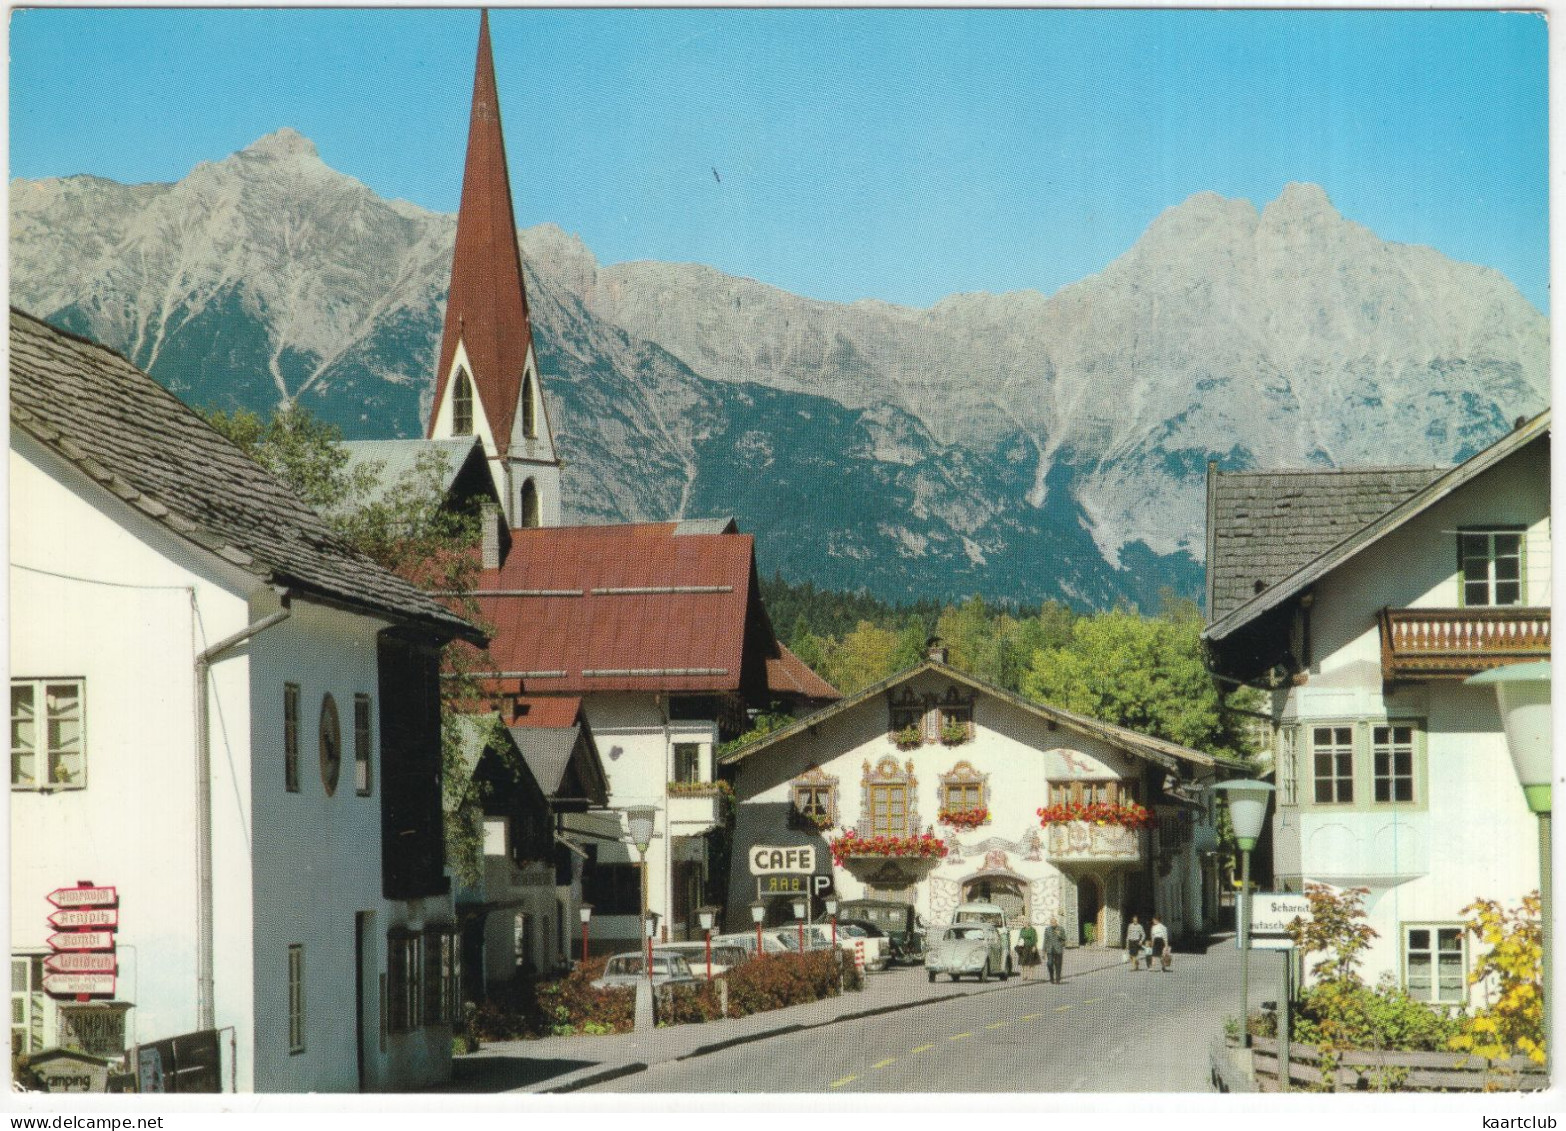 Seefeld In Tirol: LAND ROVER, VW 1200 KÄFER/COX, 'BULLI' BUS, PEUGEOT 404 - Café, Dorfstrasse - (Tirol, Austria) - Voitures De Tourisme